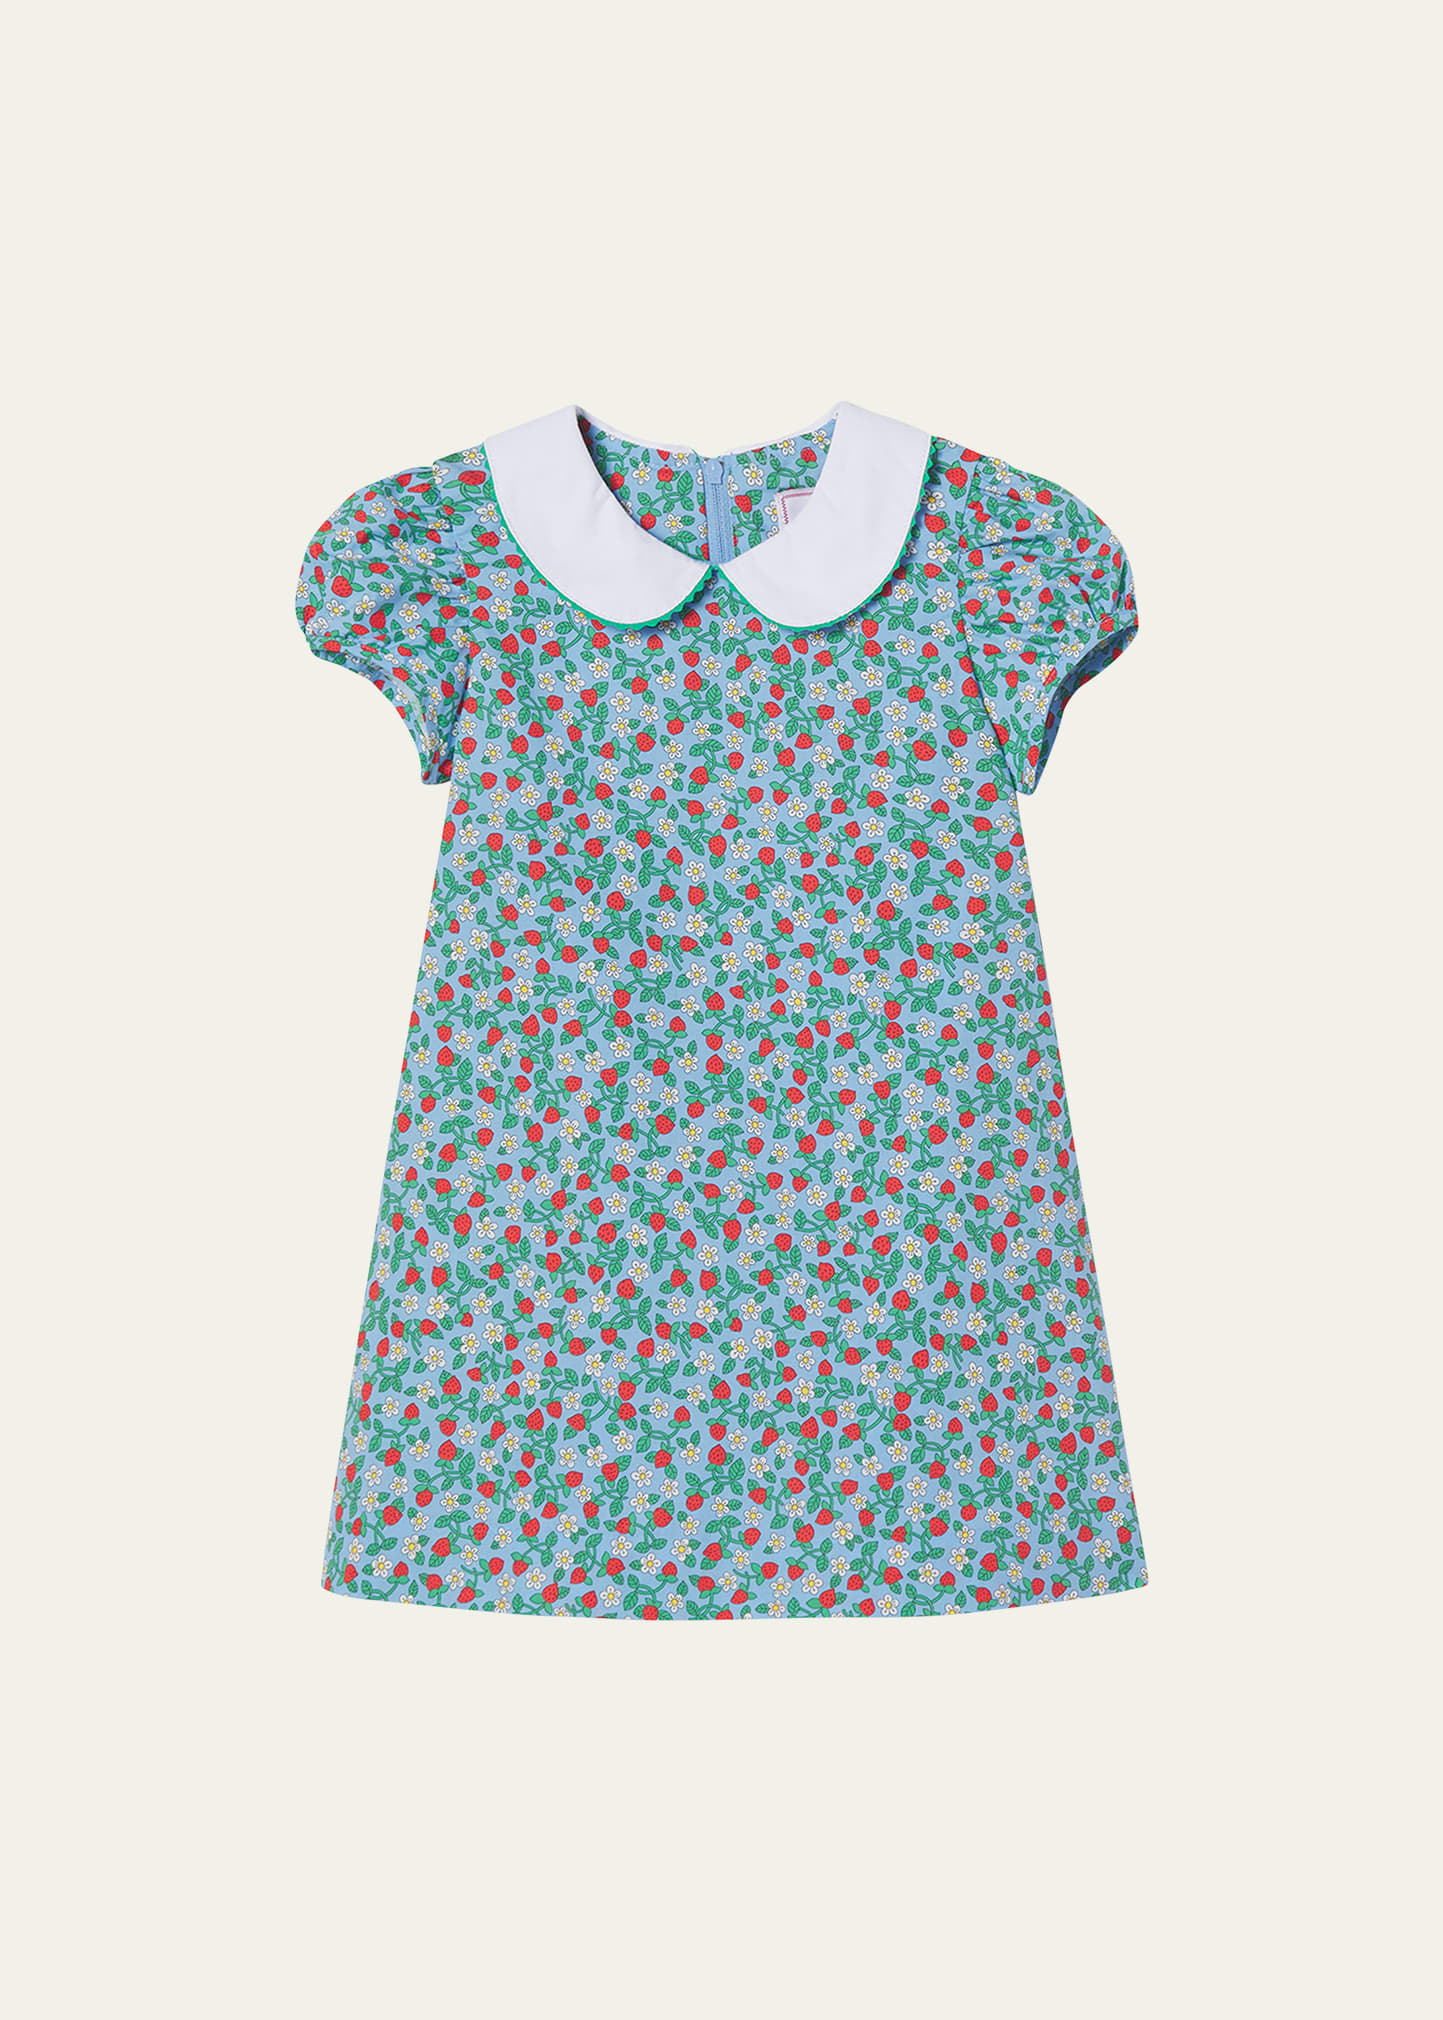 Classic Prep Childrenswear Girl's Paige Strawberry-Print Dress, Size 6M-7